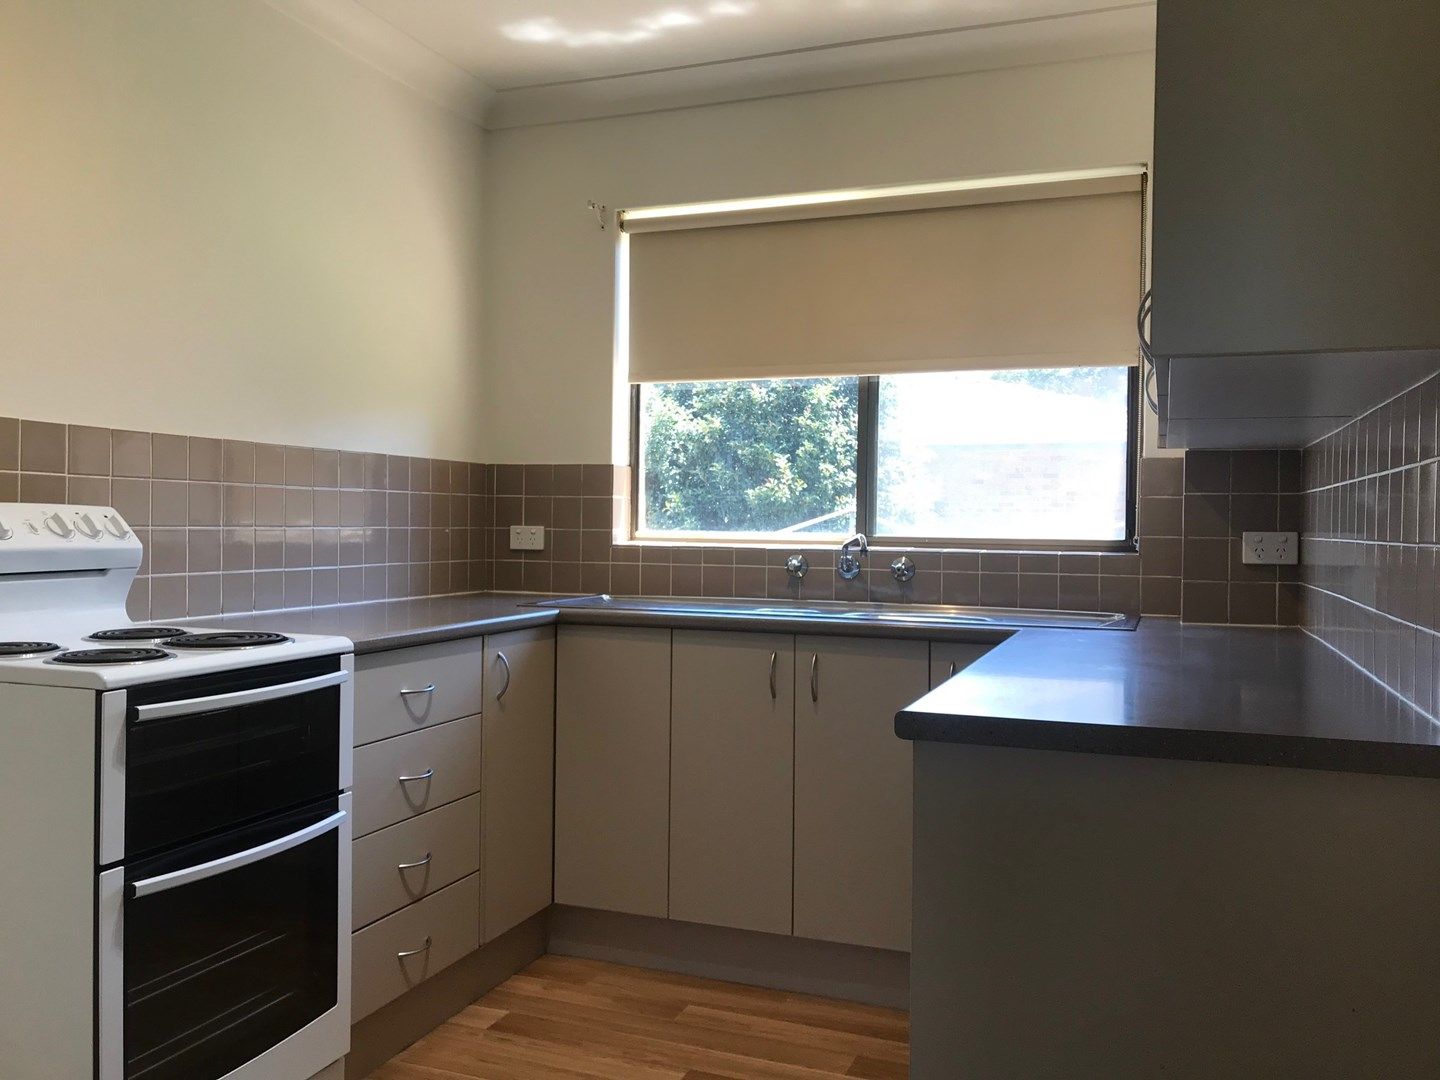 2 bedrooms Apartment / Unit / Flat in 8/85 Kelso Street SINGLETON NSW, 2330